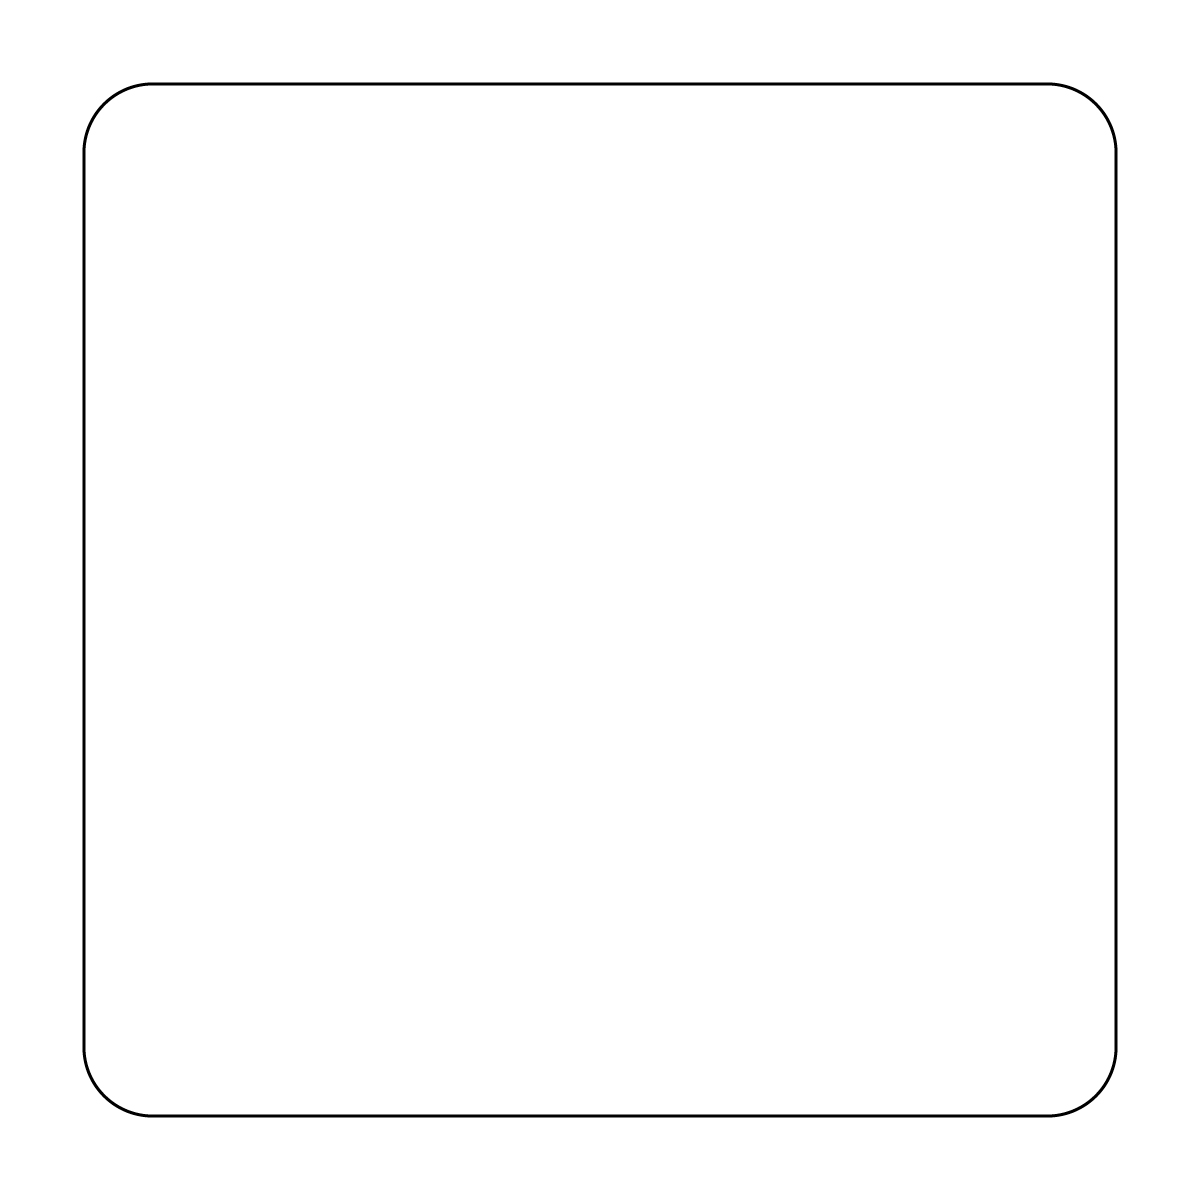 White Square Paperboard Coaster - 3.75" x 3.75"